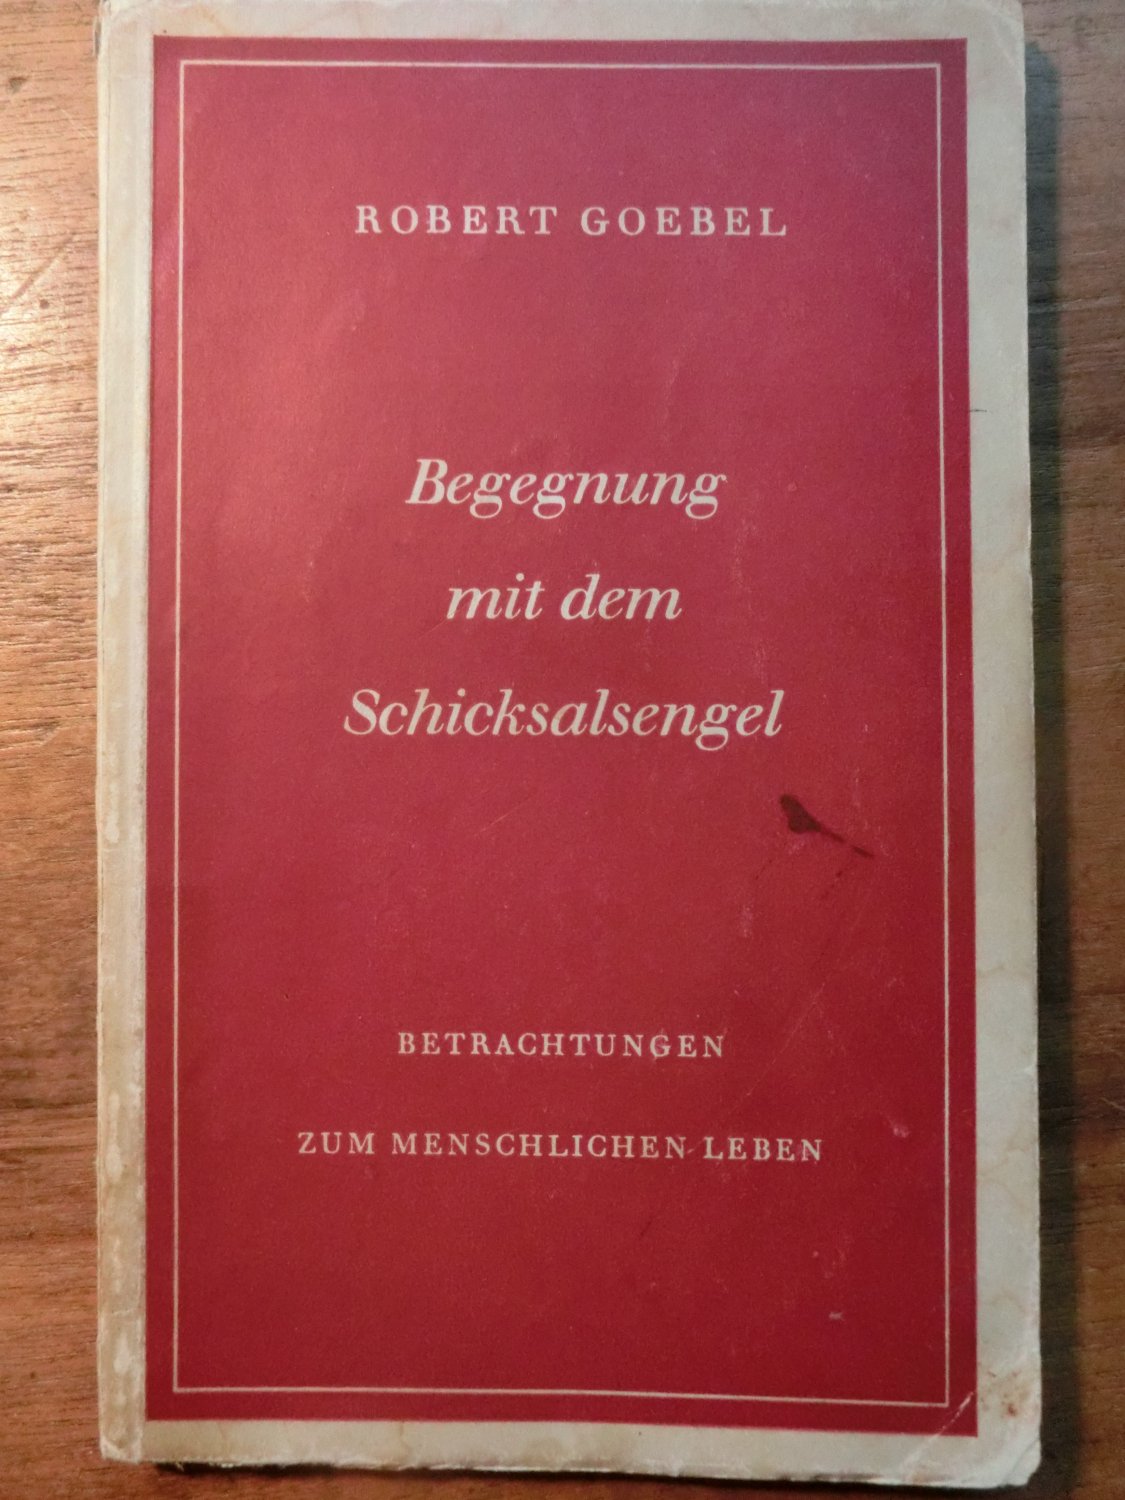 GOEBEL, ROBERT - Begegnung mit dem Schicksalsengel